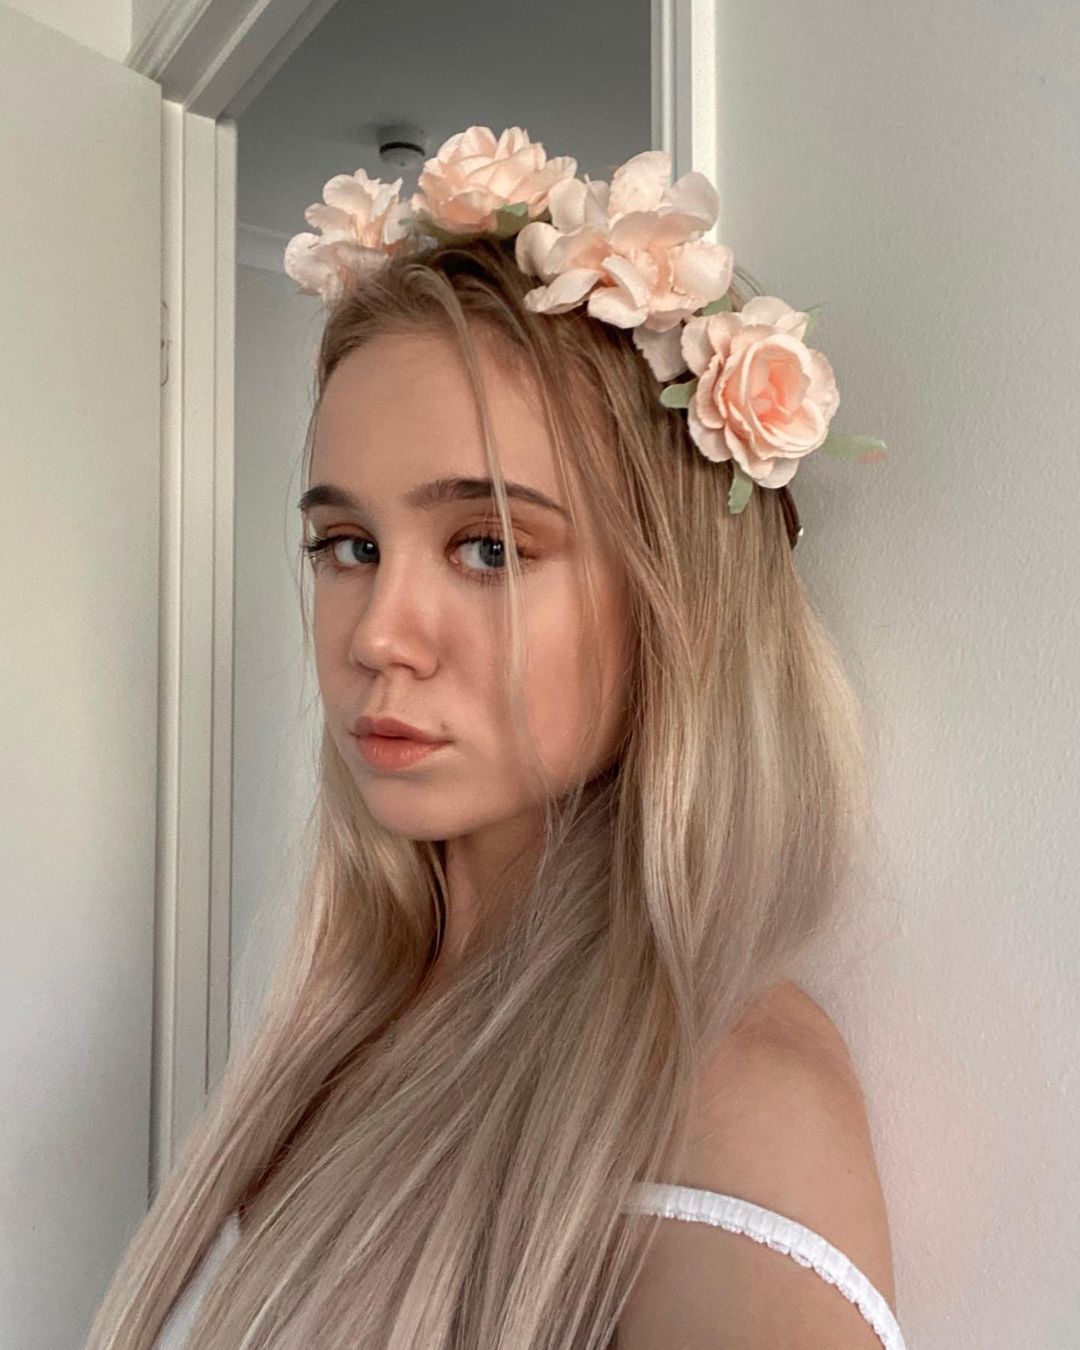 Alisa Goldfinch seen in Flower Hair Band During Instagram Selfie Photos 11/05/2021 2